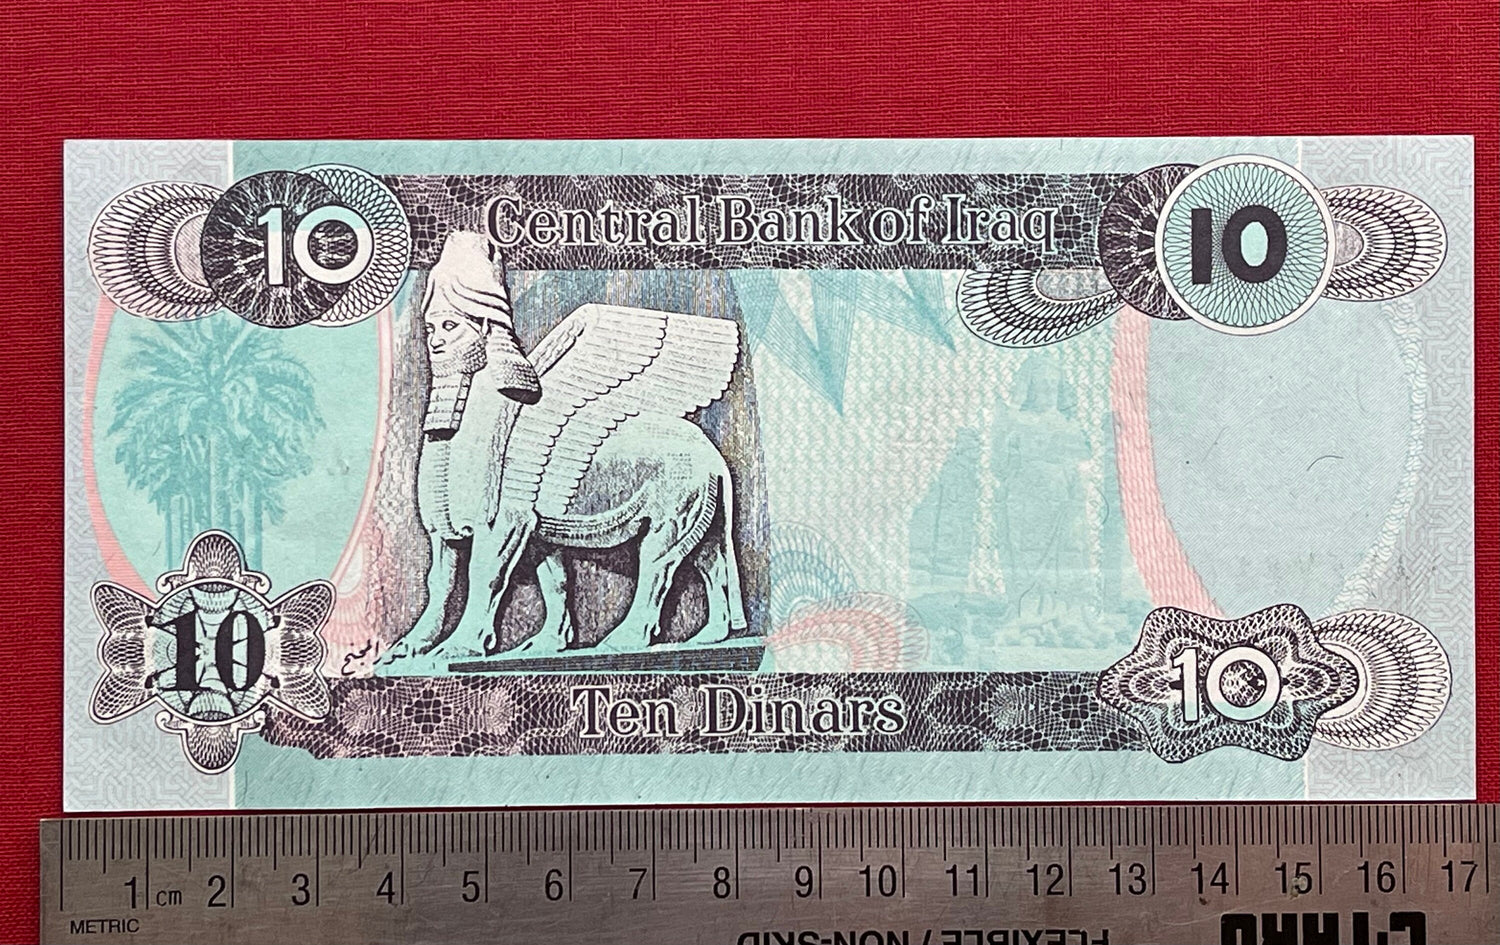 Lamassu Winged Bull, Human-Headed Five-Legged Goddess-turned-God & Saddam Hussein 10 Dinars Iraq Authentic Banknote for Jewelry and Craft